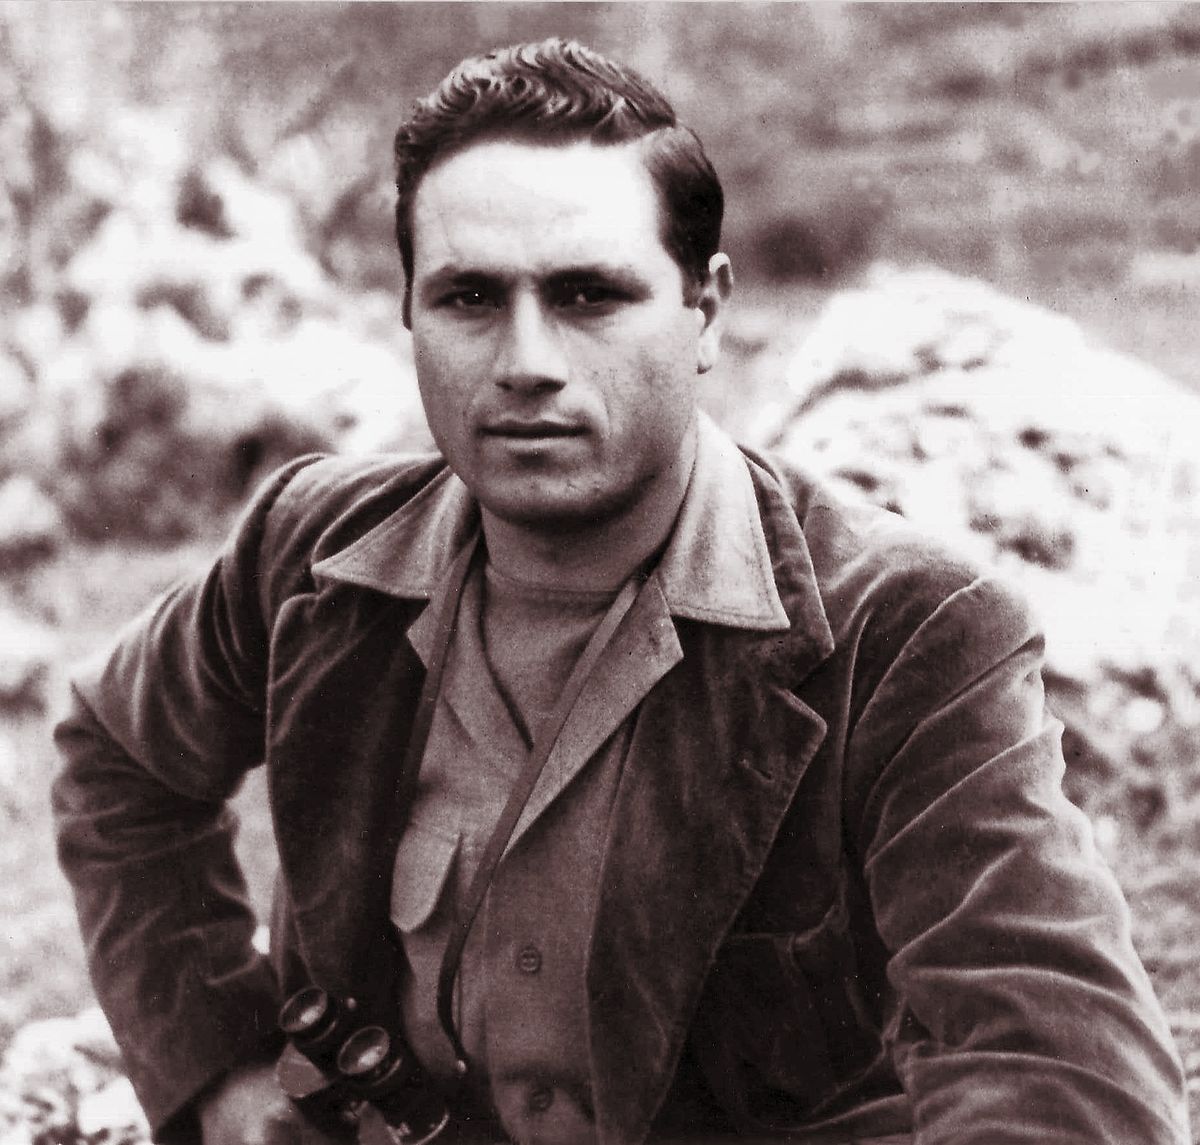 Giuliano, Salvatore, 16.11.1922 - 5.7.1950, Sicilian bandit, his